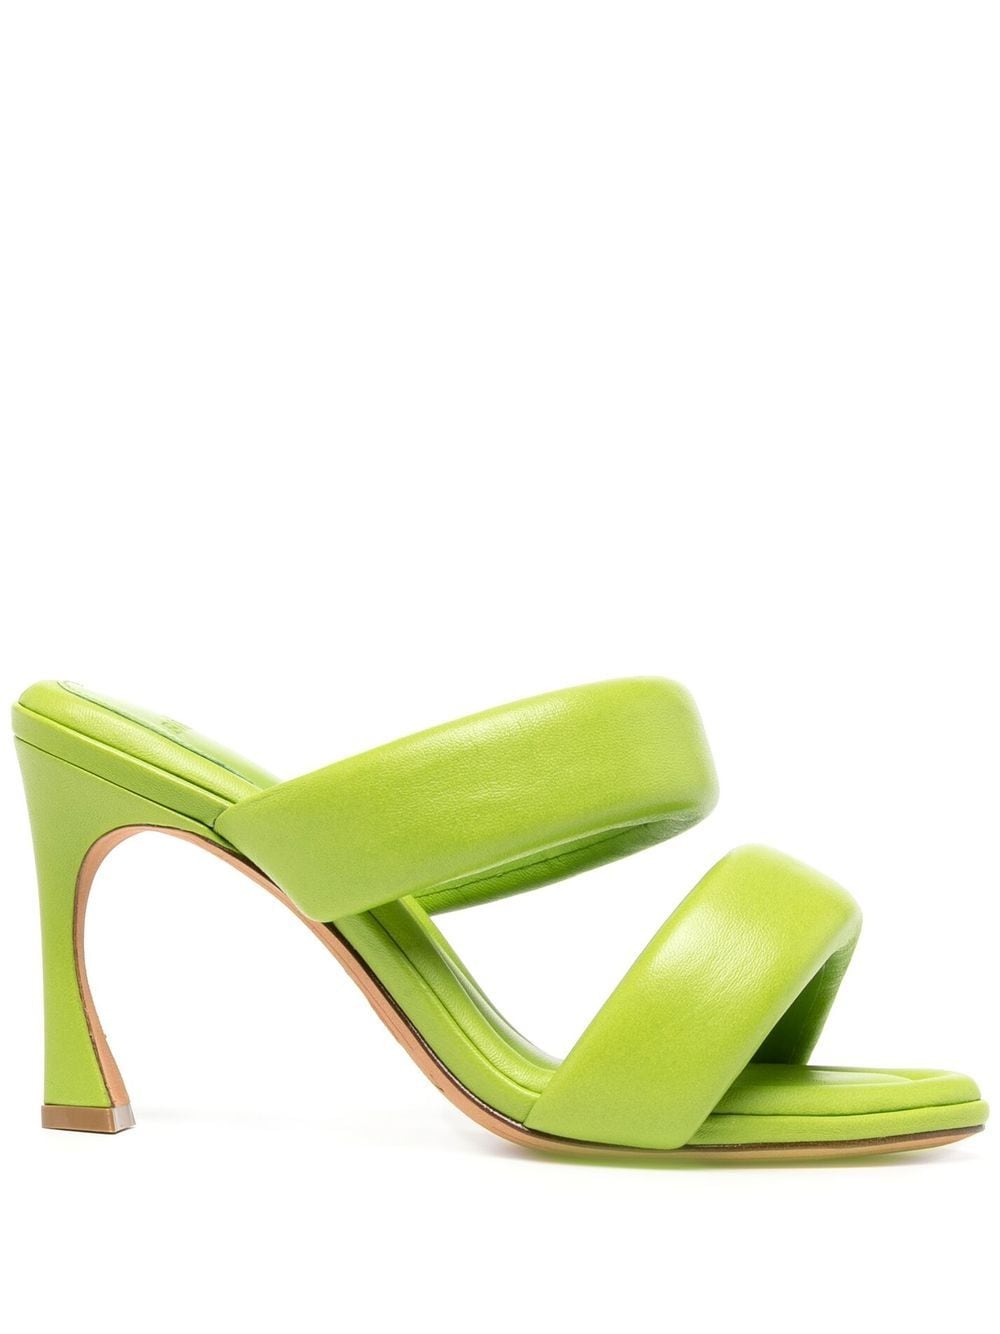 Alexandre Birman Lilla double-strap sandals - Green von Alexandre Birman